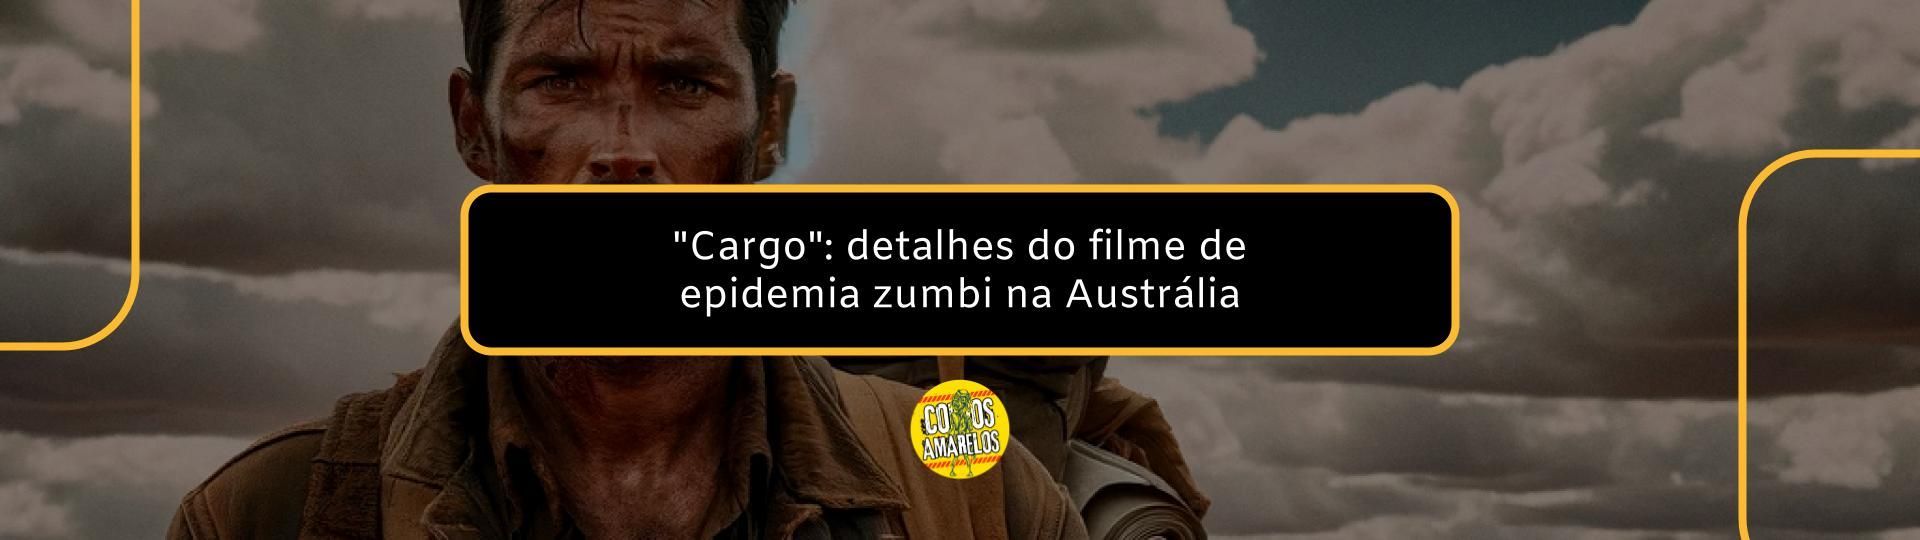 cargo-detalhes-do-filme-de-epidemia-zumbi-na-australia